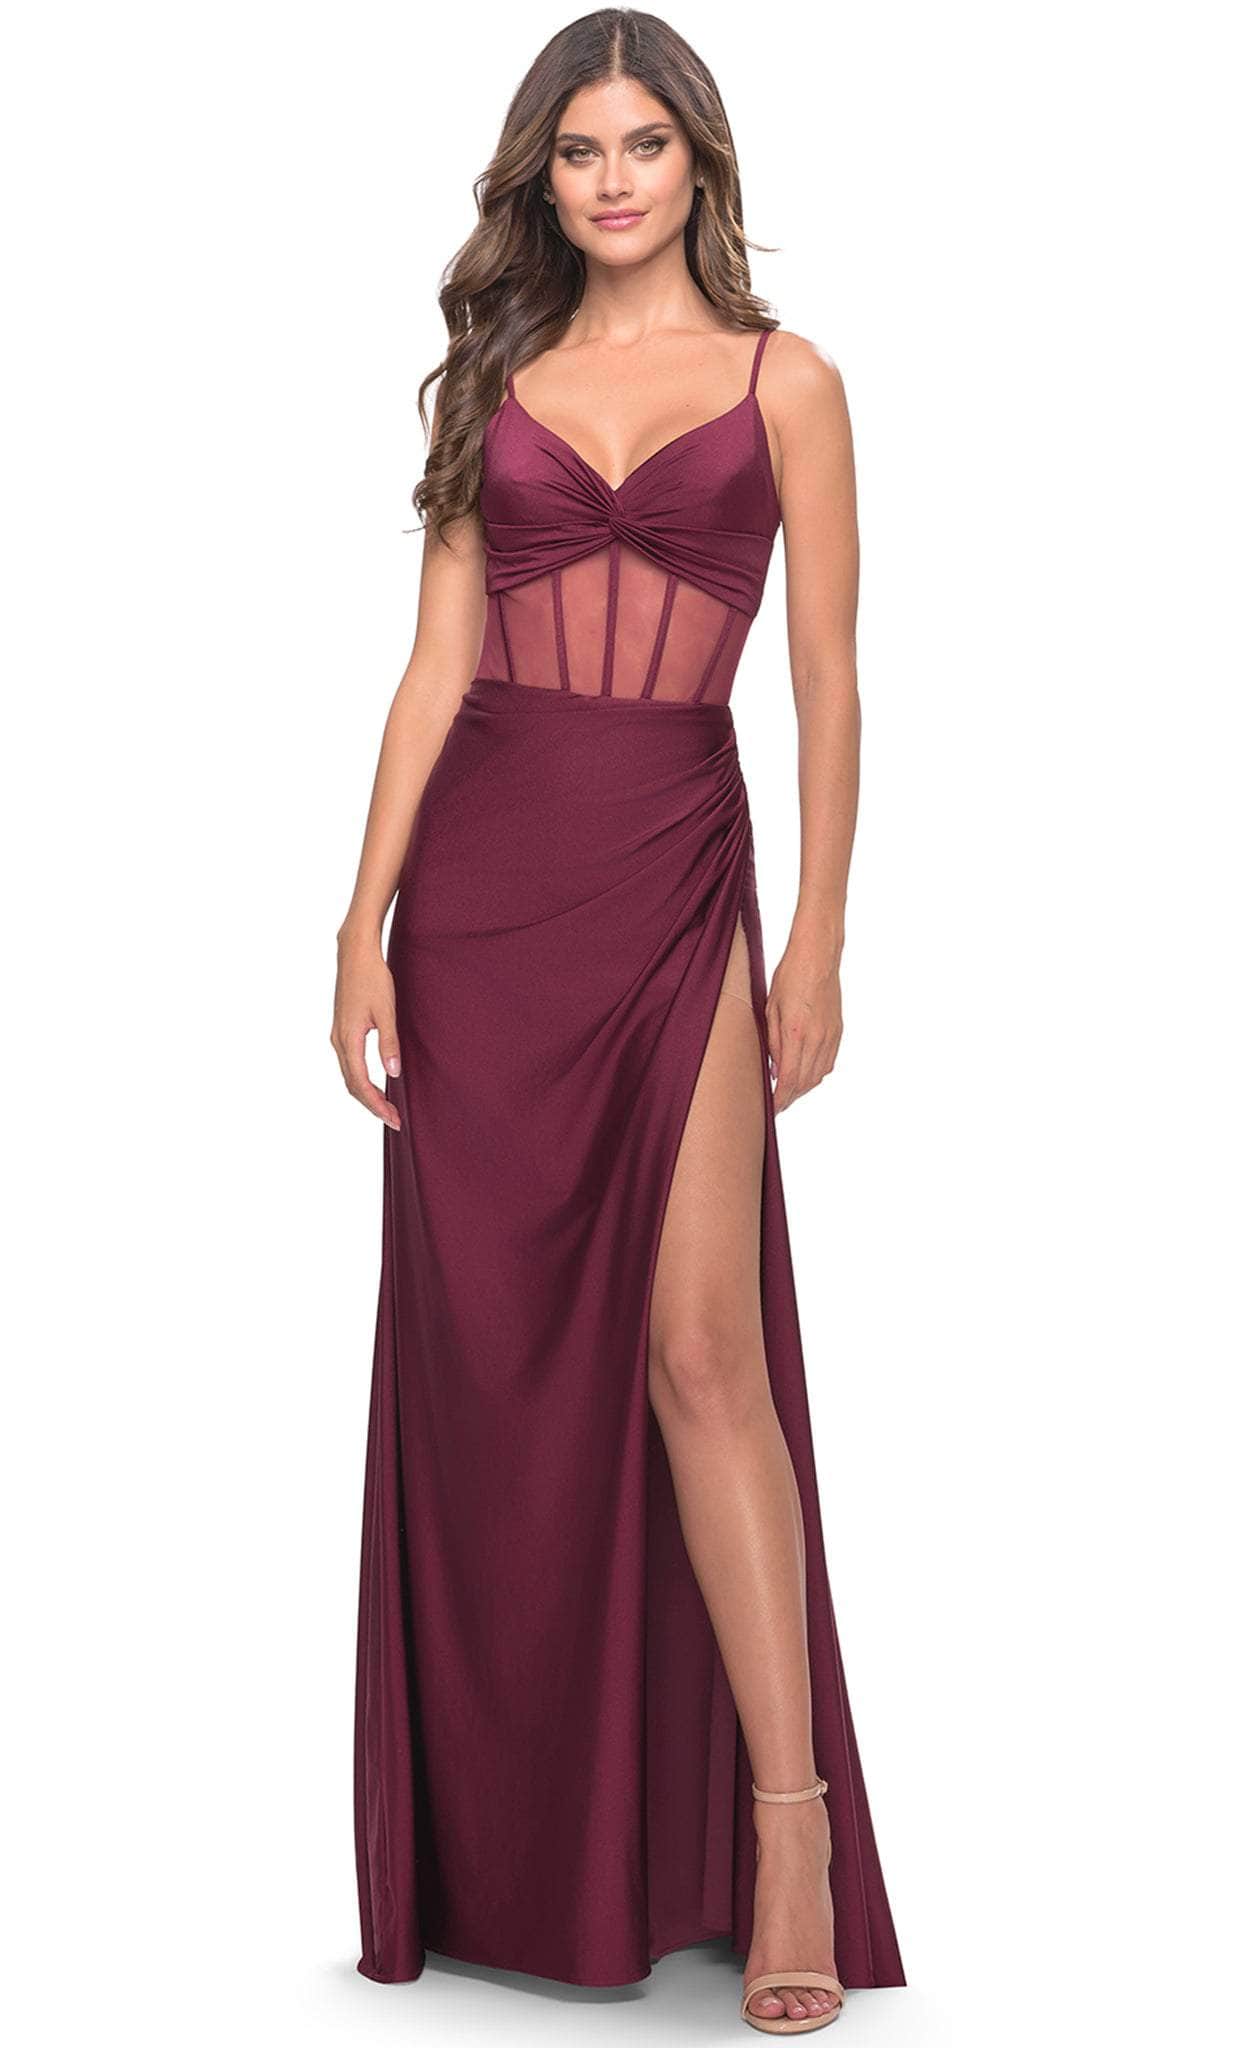 La Femme 31229 - Sweetheart Sheer Corset Long Prom Dress – Couture